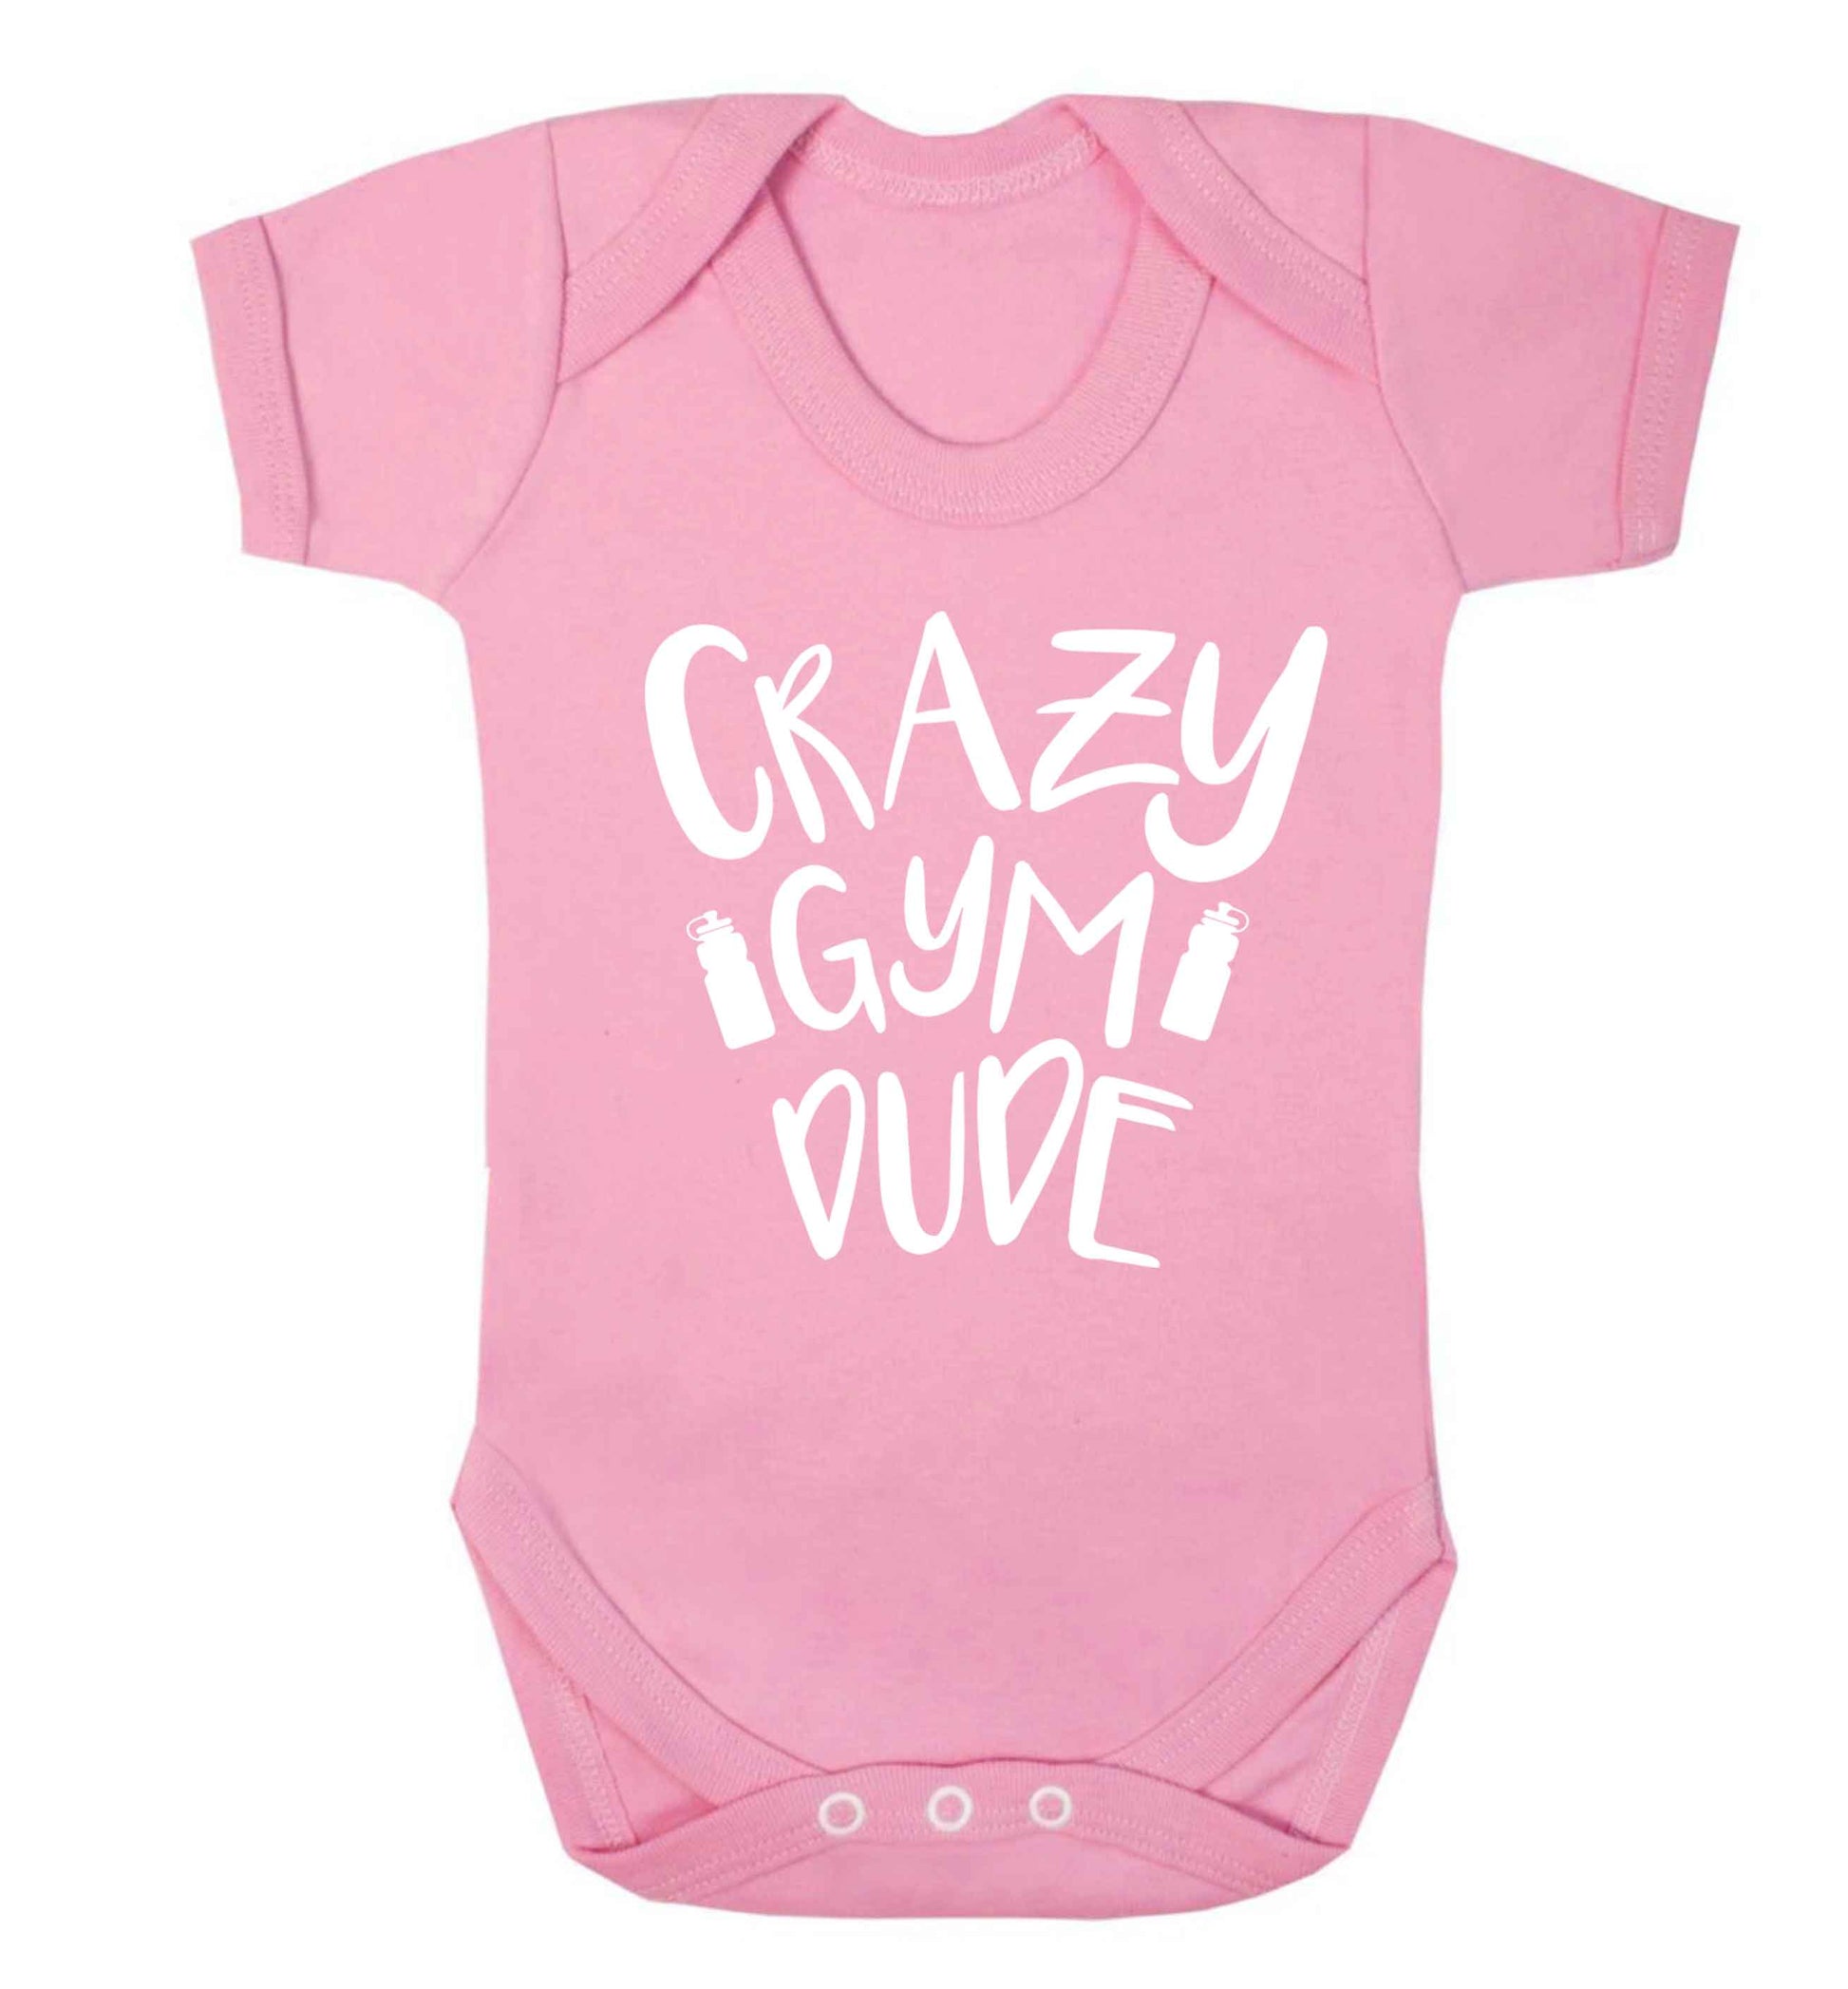 Crazy gym dude Baby Vest pale pink 18-24 months